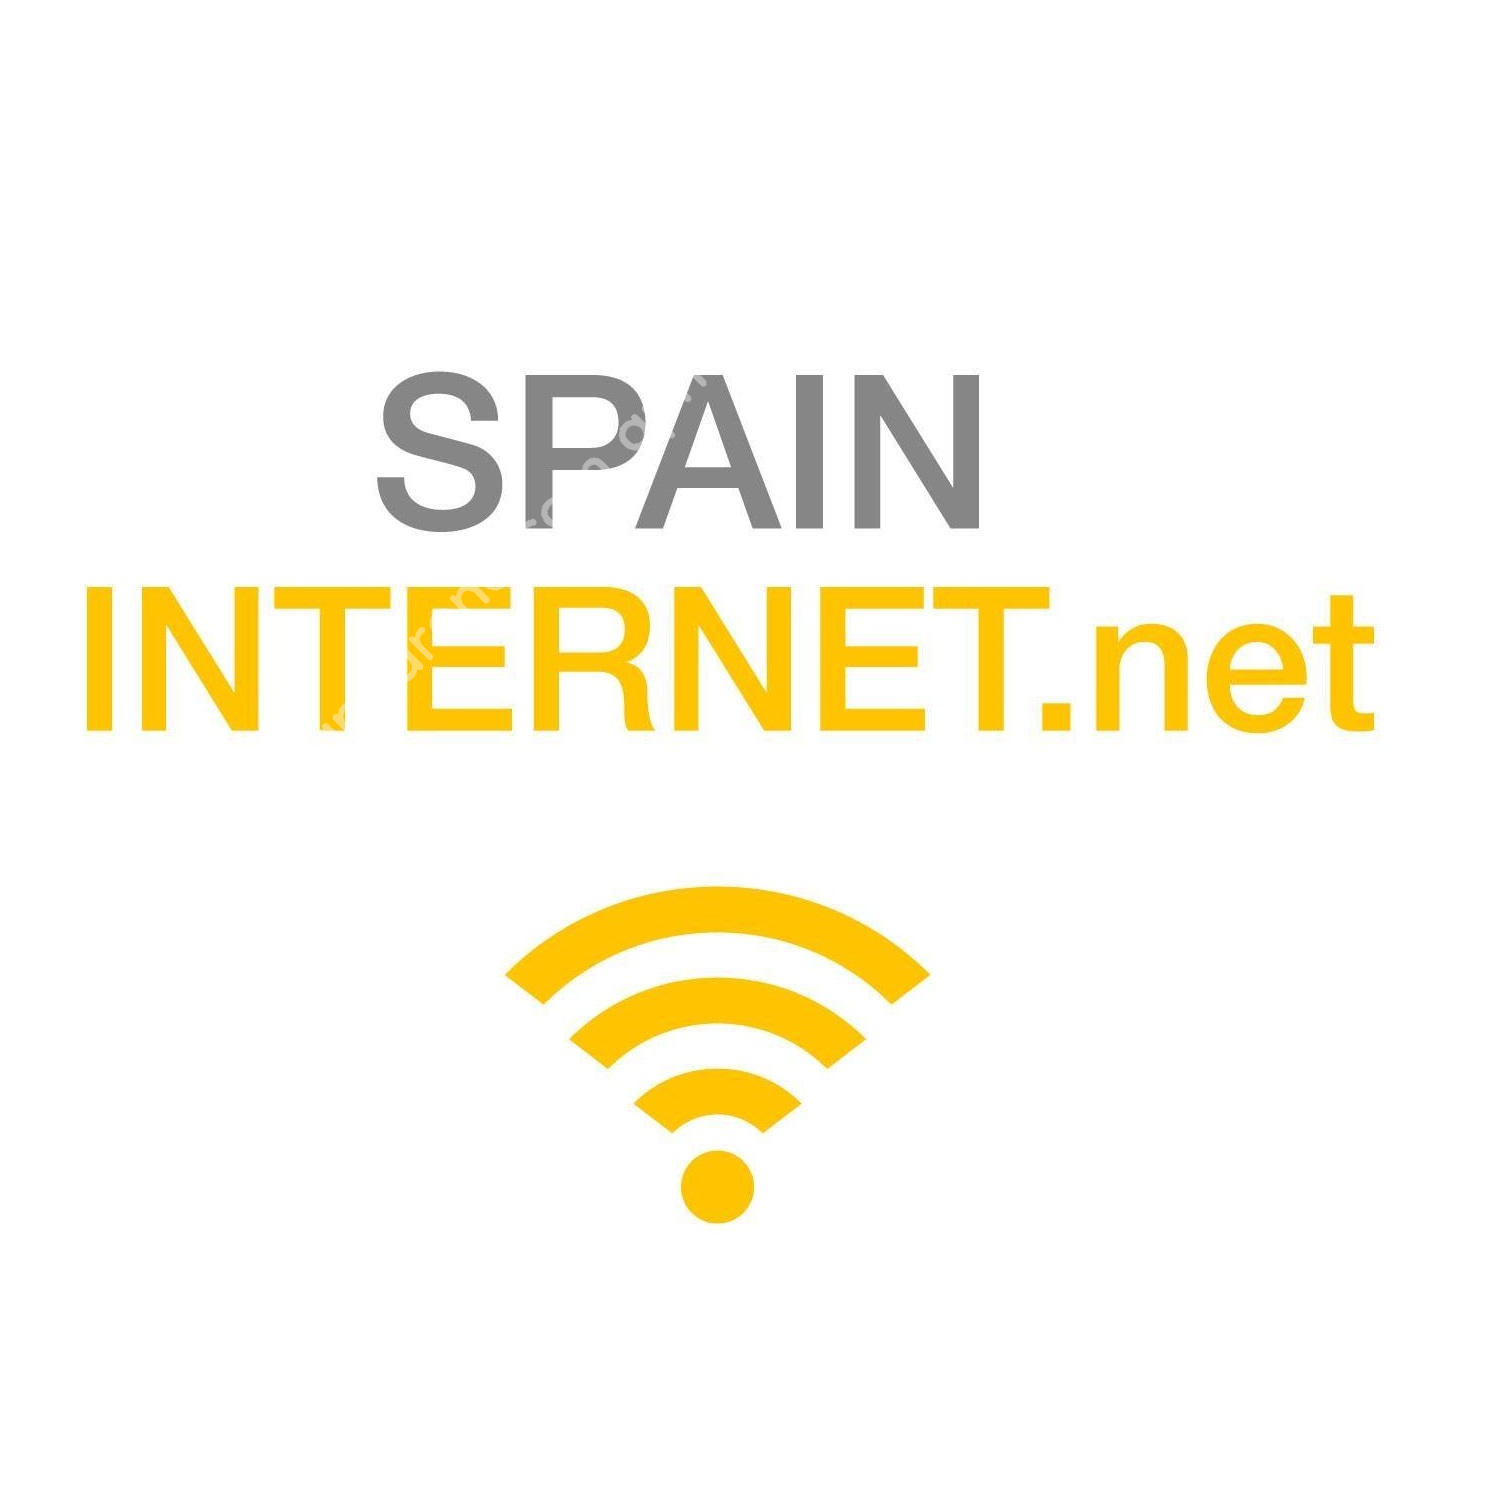 Spain Internet APN Internet Settings Android iPhone